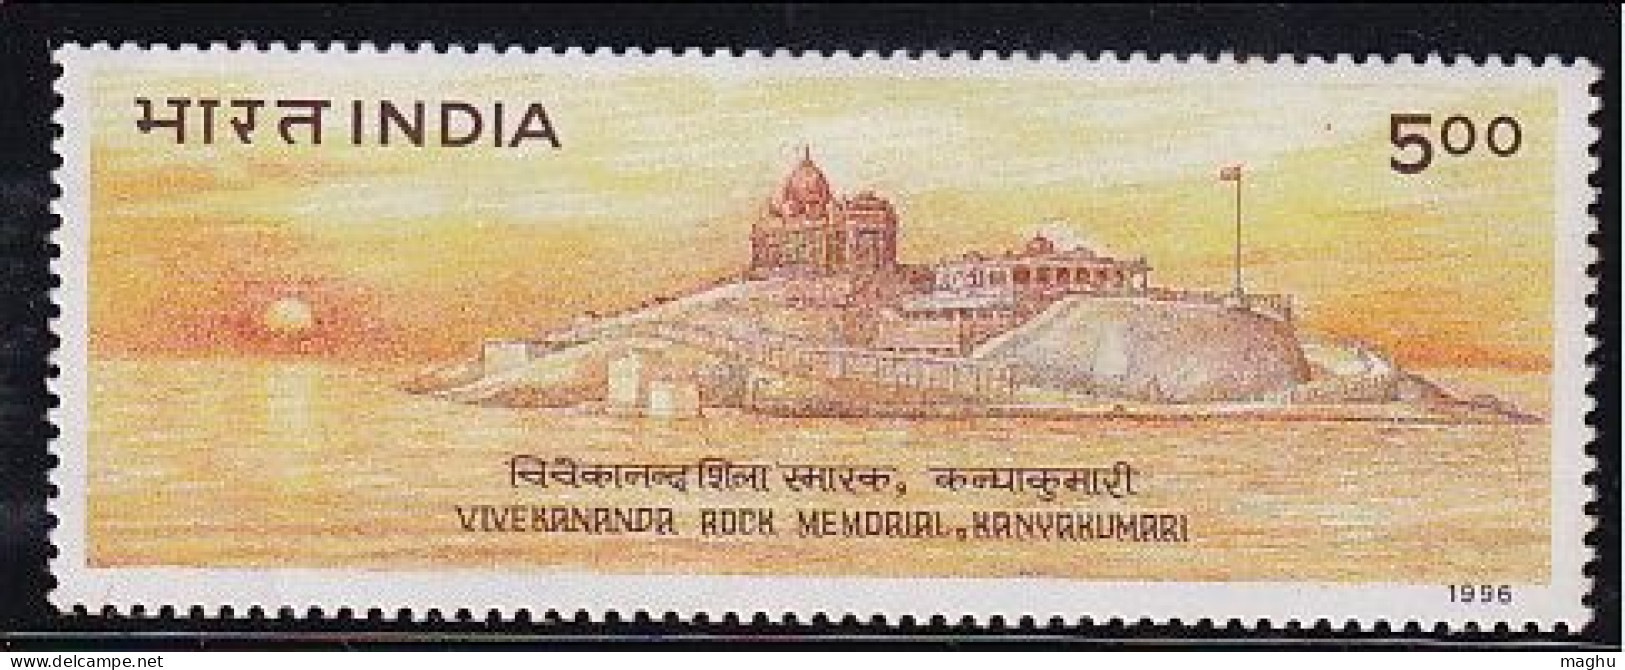 India MNH 1996, Vivekananda Rock Memorial, Kanyakumari, Flag, Sun, Astronomy, Cond.,stains - Nuevos